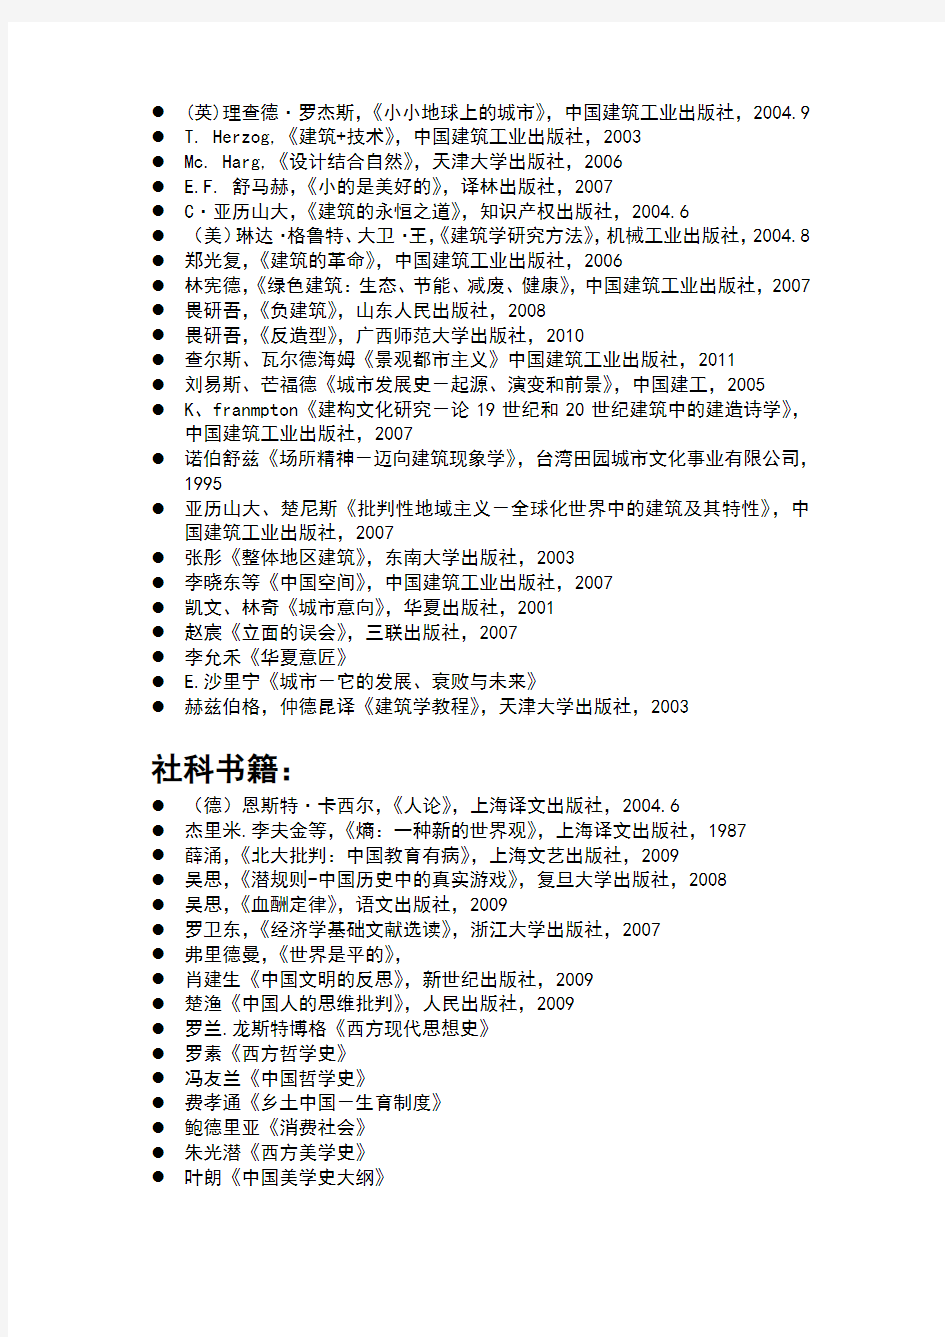 BaofengLi提出建筑学必读书单